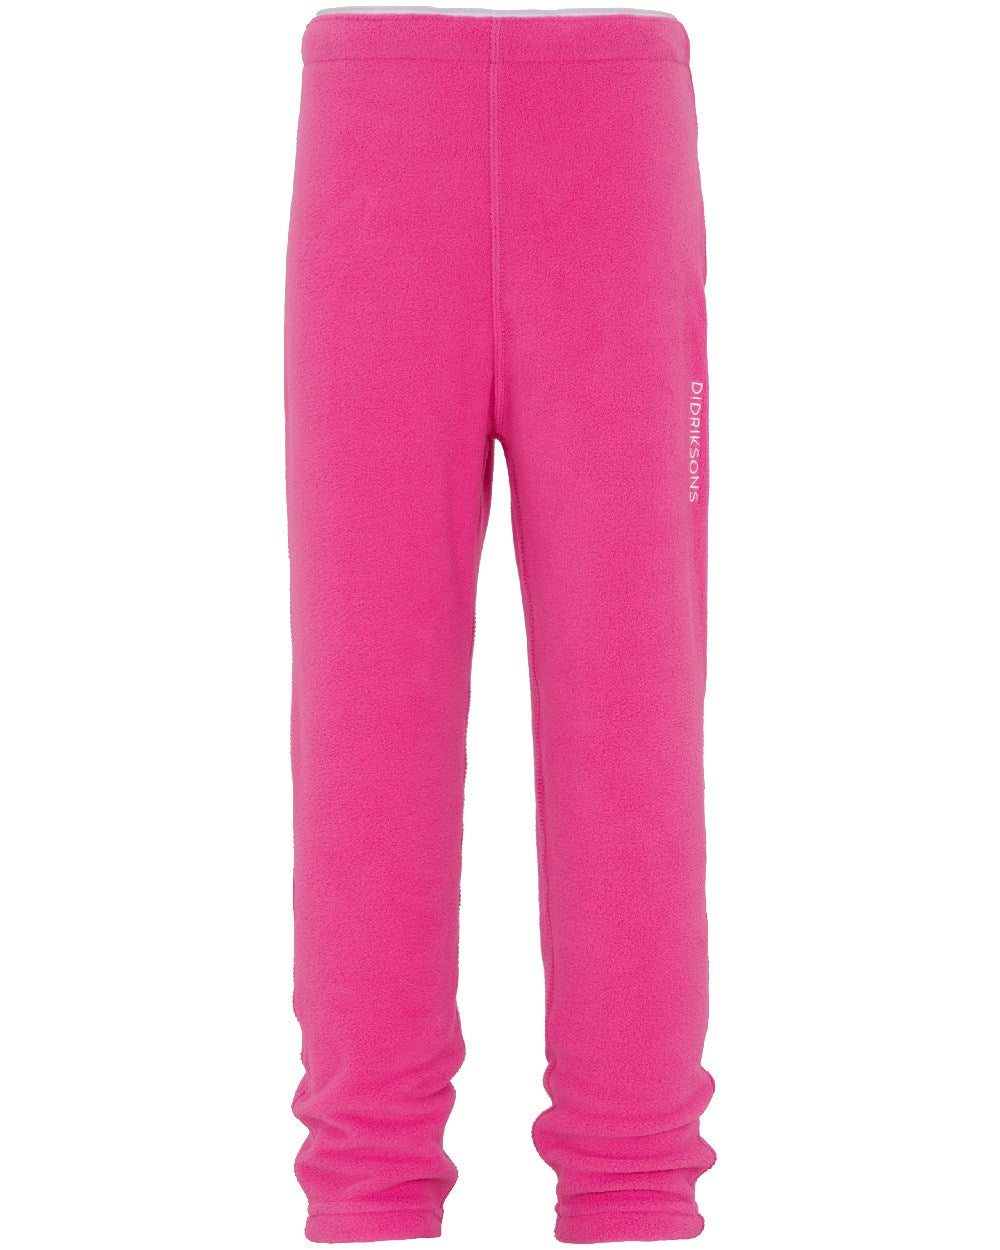 Didriksons Monte Kids Pants in Plastic Pink 